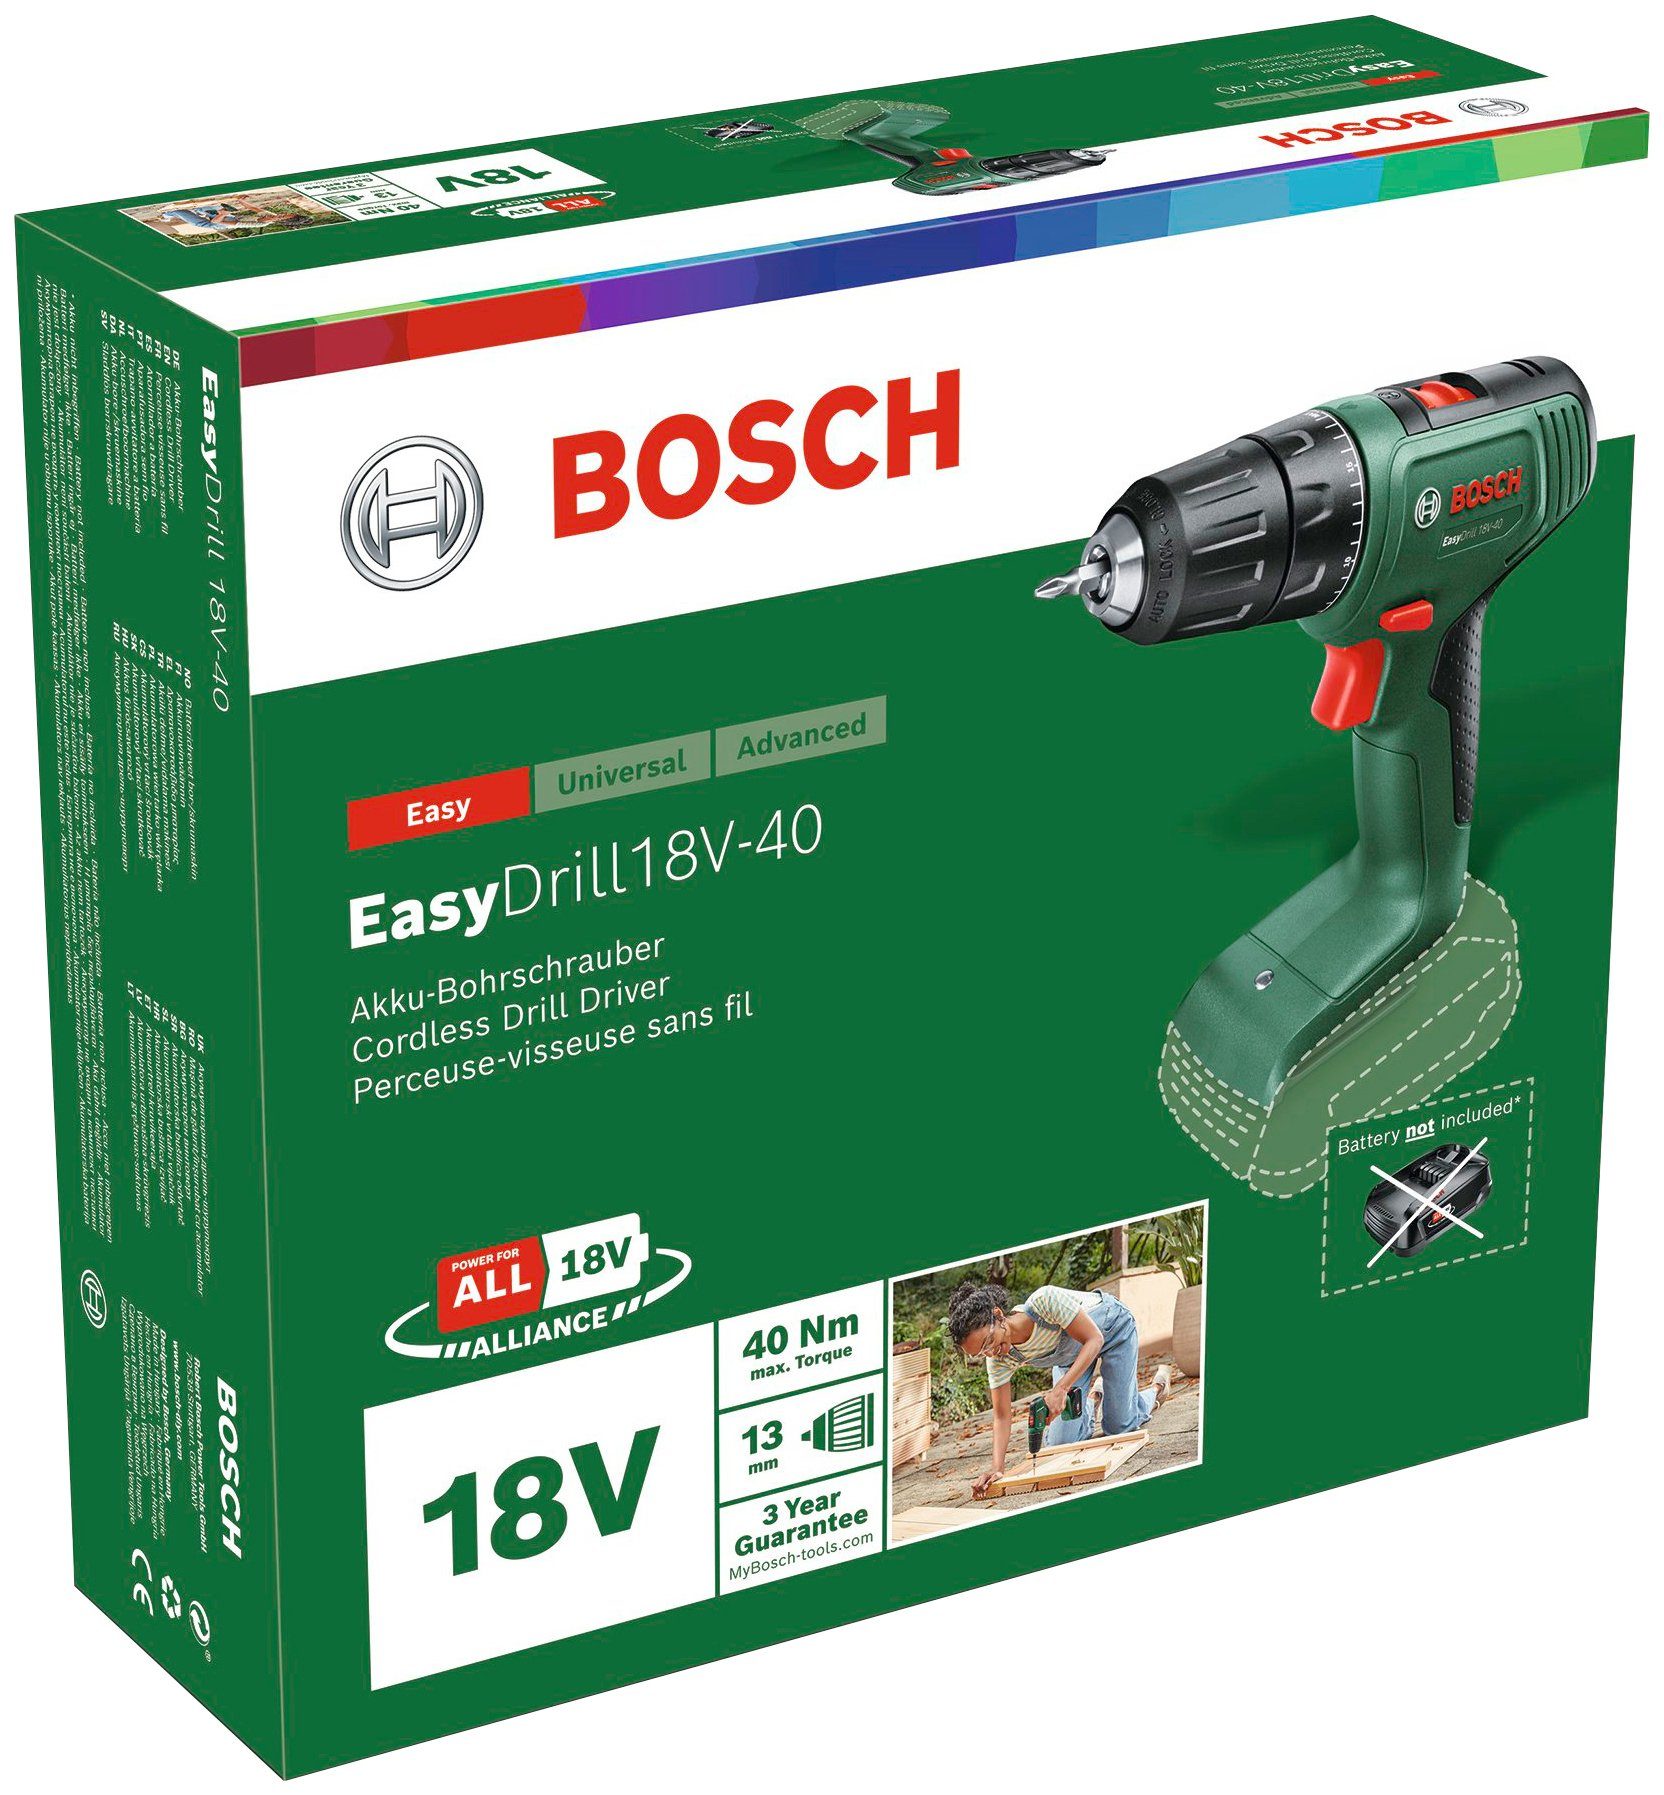 Bosch Home & Volt Ladegerät, Easydrill Akku ohne 18V-40, System 18 und Akku-Bohrschrauber Garden